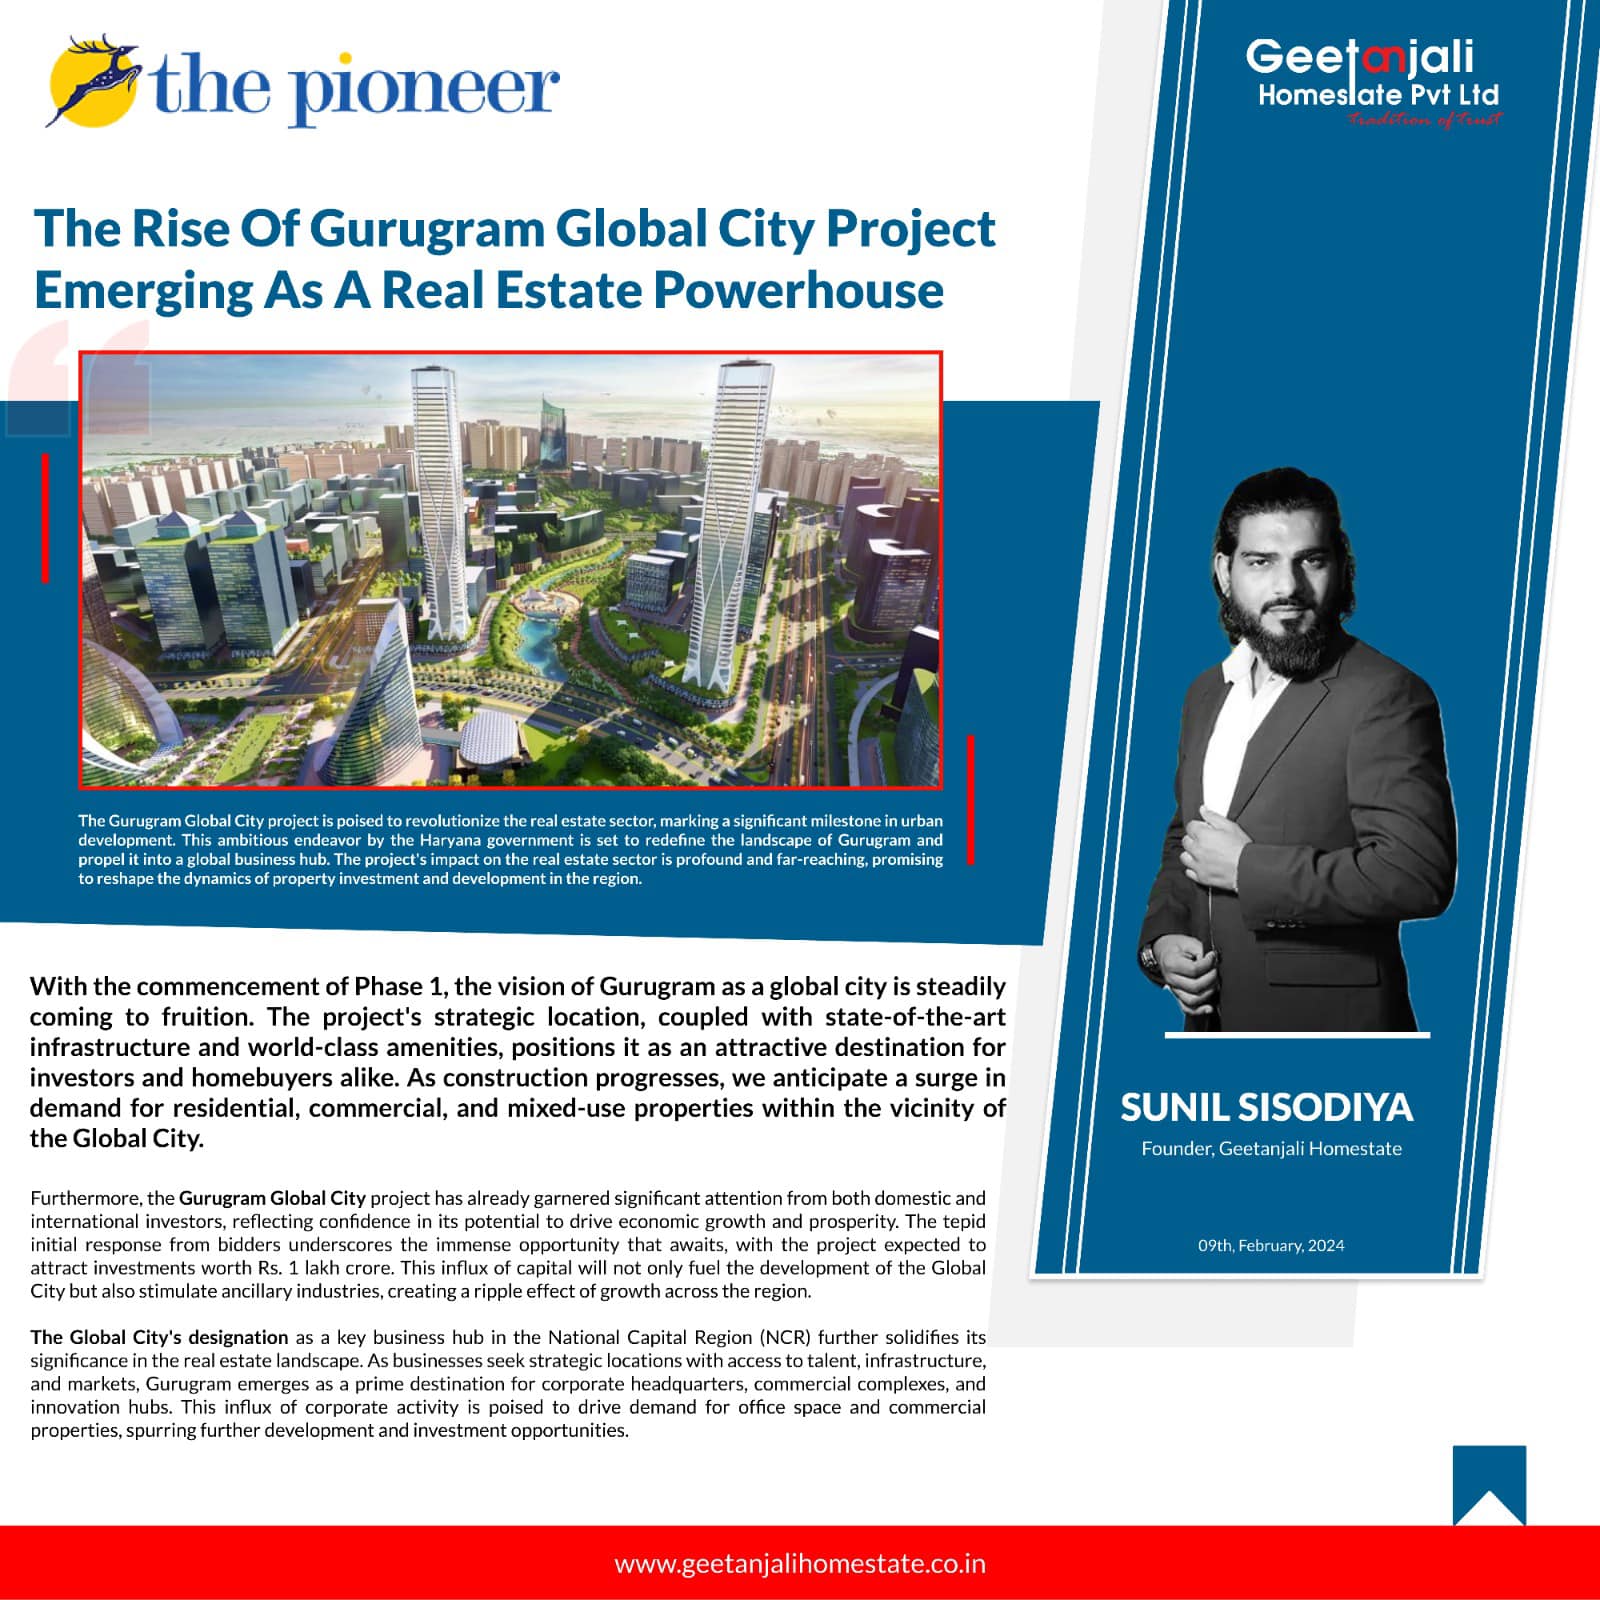 The Rise of Gurugram Global City Project Emerging as a Real Estate Powerhouse : Sunil Sisodiya, Founder, Geetanjali Homestate